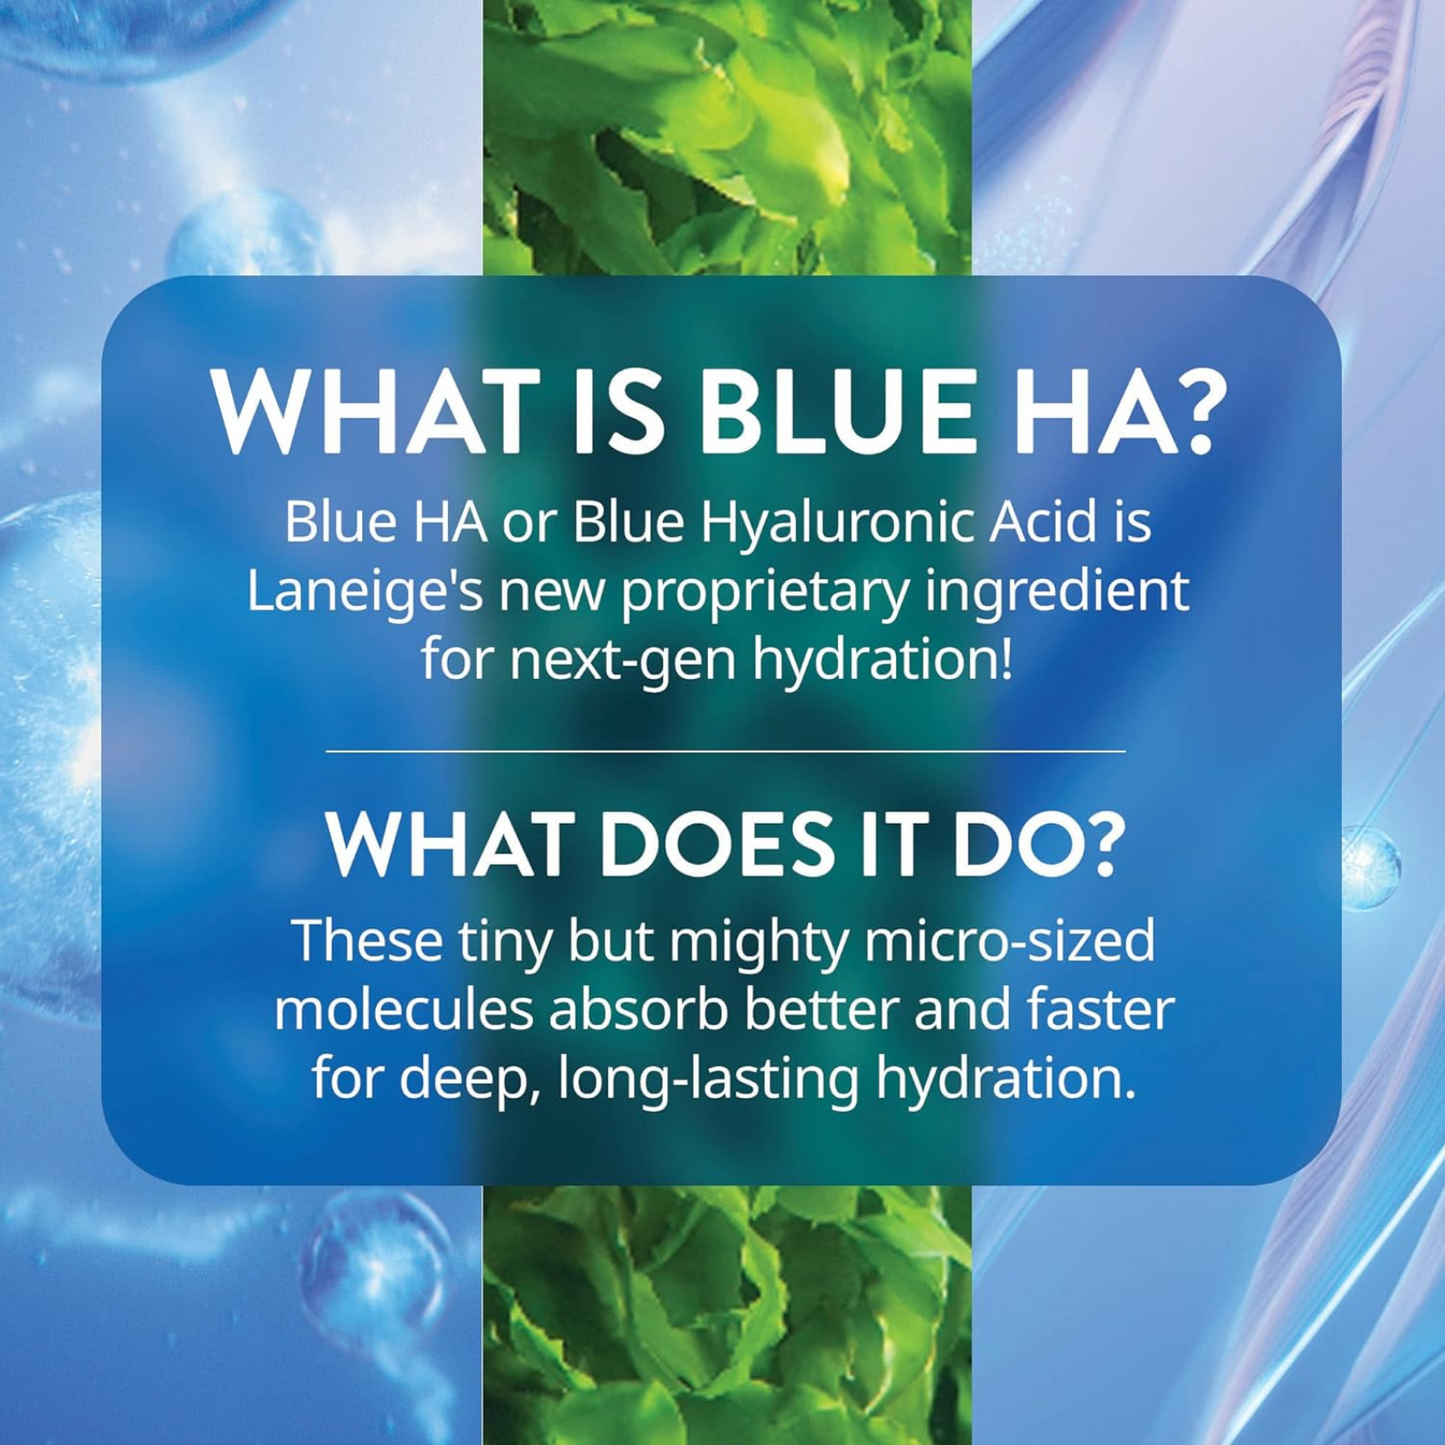 LANEIGE - Water Bank Blue Hyaluronic Cream Moisturizer